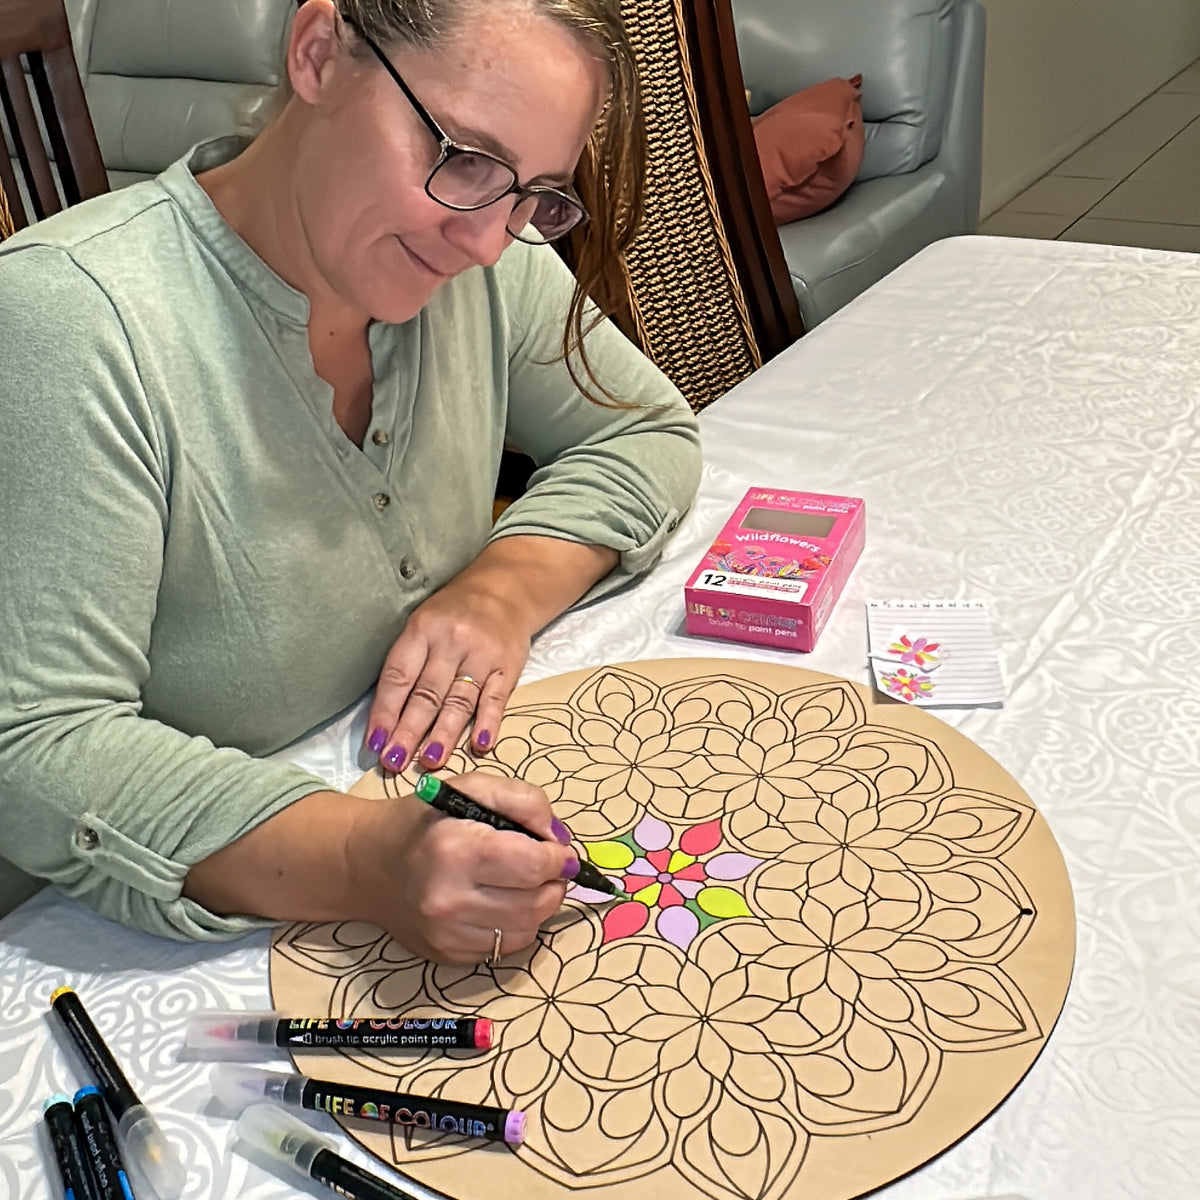 Small Mandala WEALTH Painting Kit, Wooden Mandala Paint Kits for